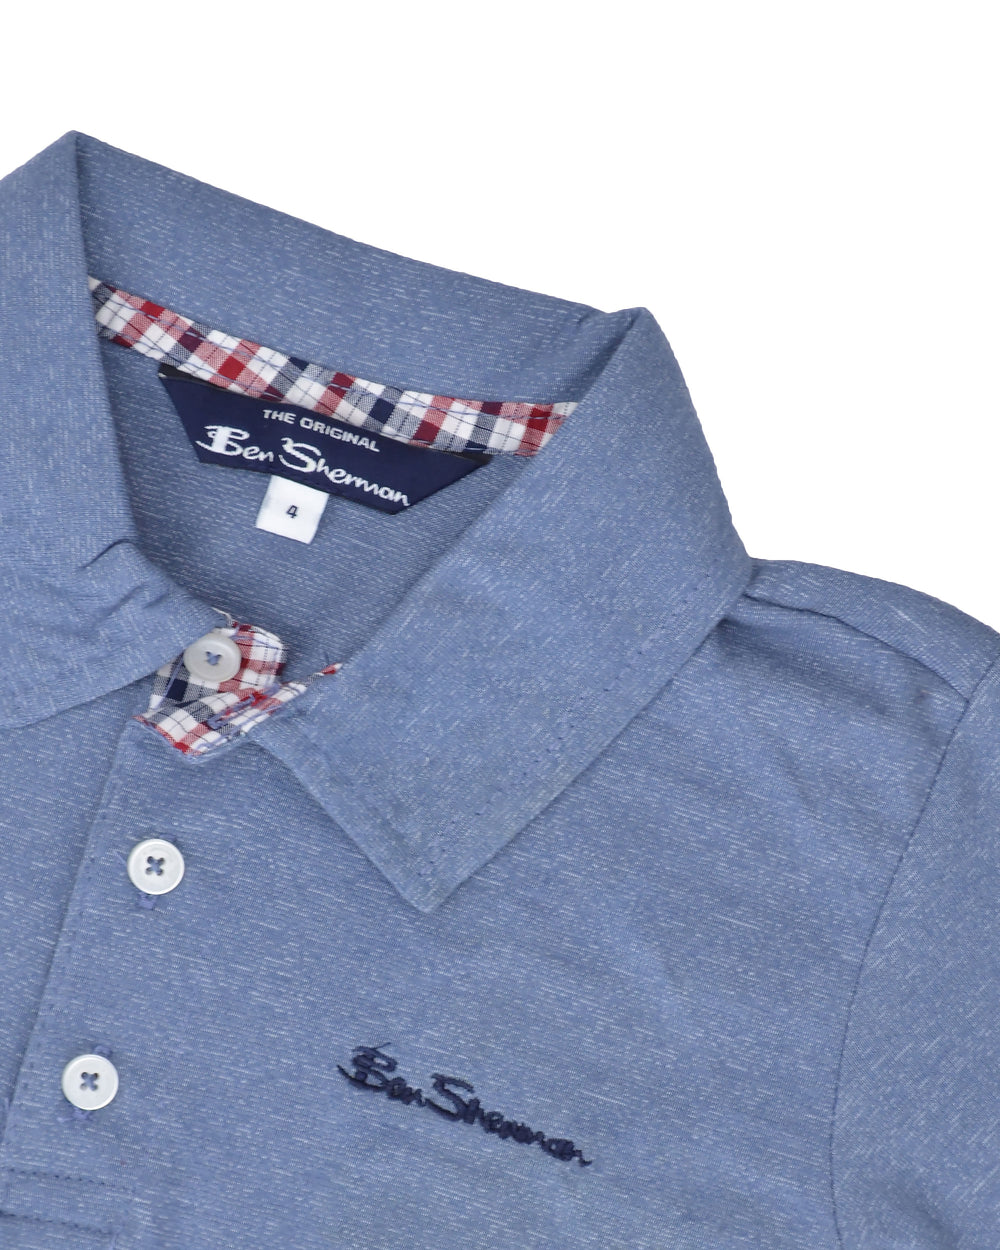 Boys' Short-Sleeve Polo Shirt - Blue (Sizes 8-18)